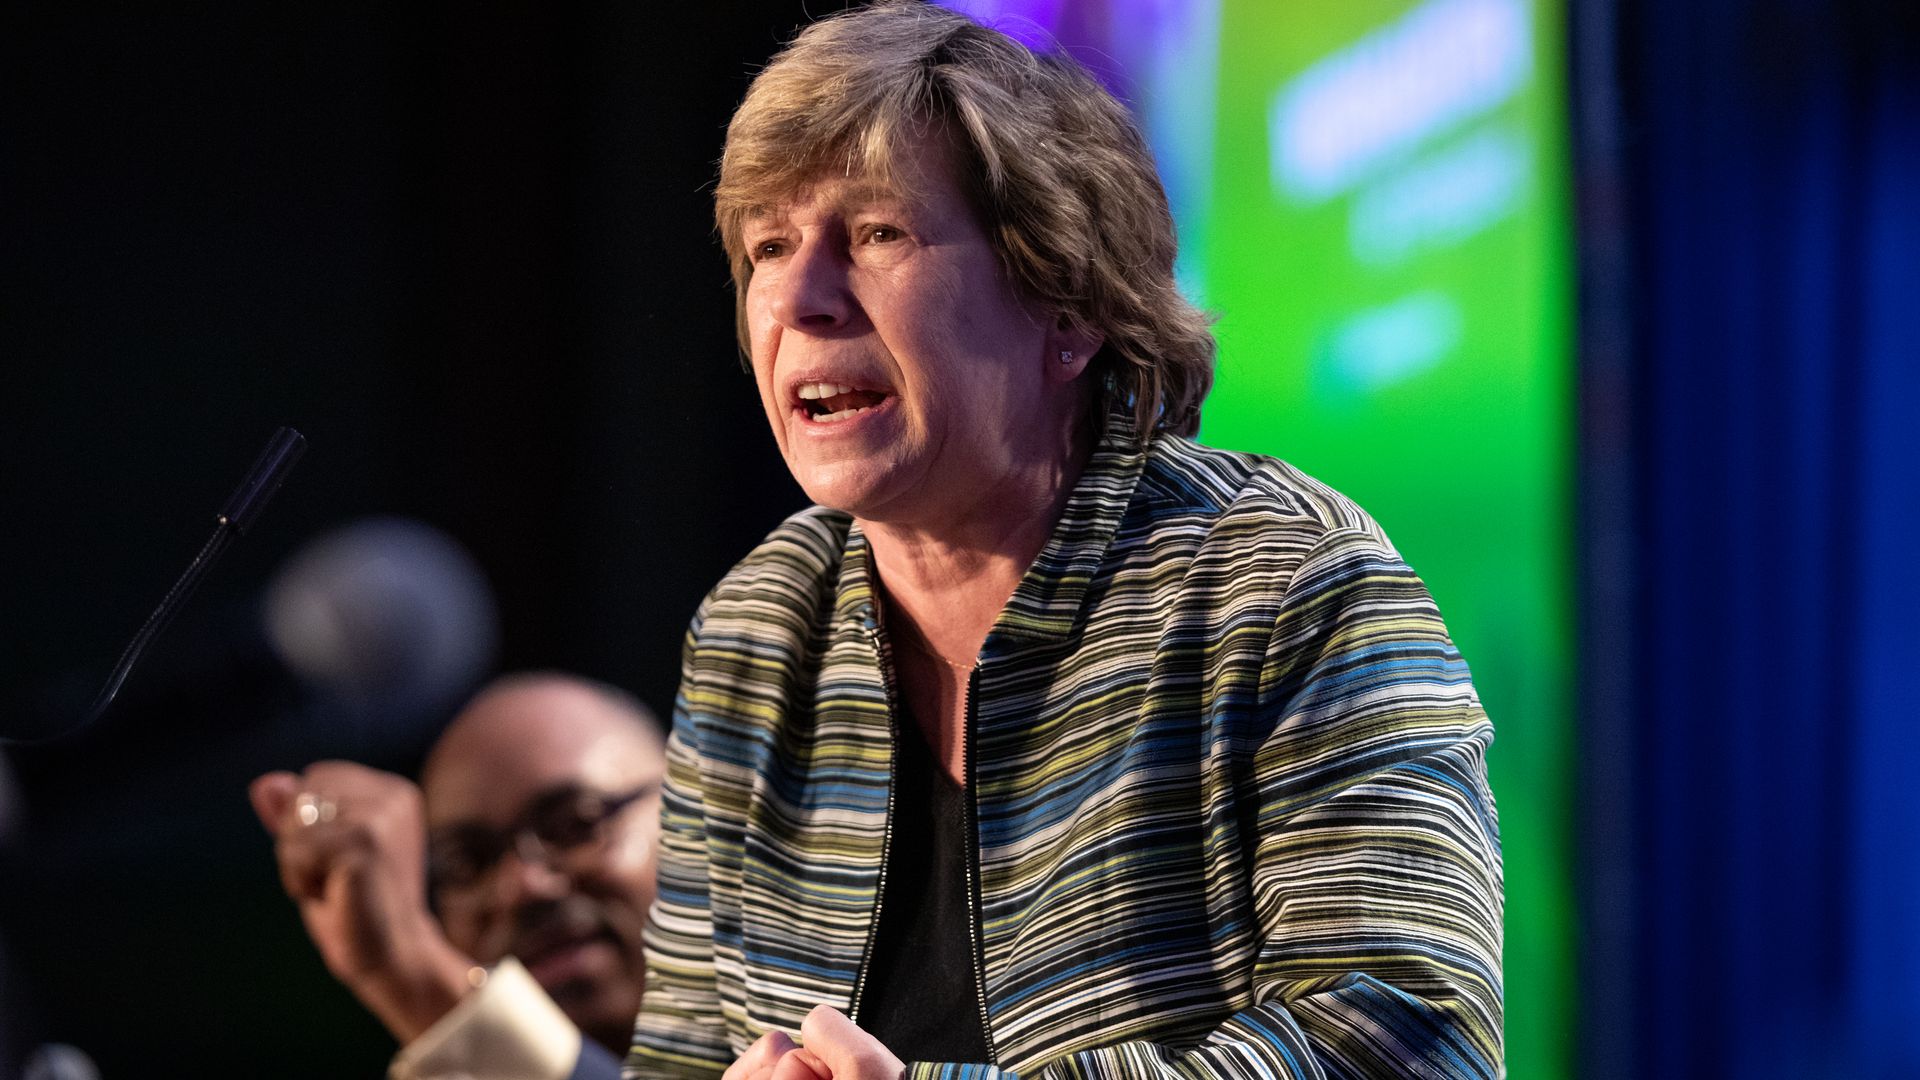 Randi Weingarten, president of the American Federation of Teachers, speaking in Washington, D.C., in February 2020.